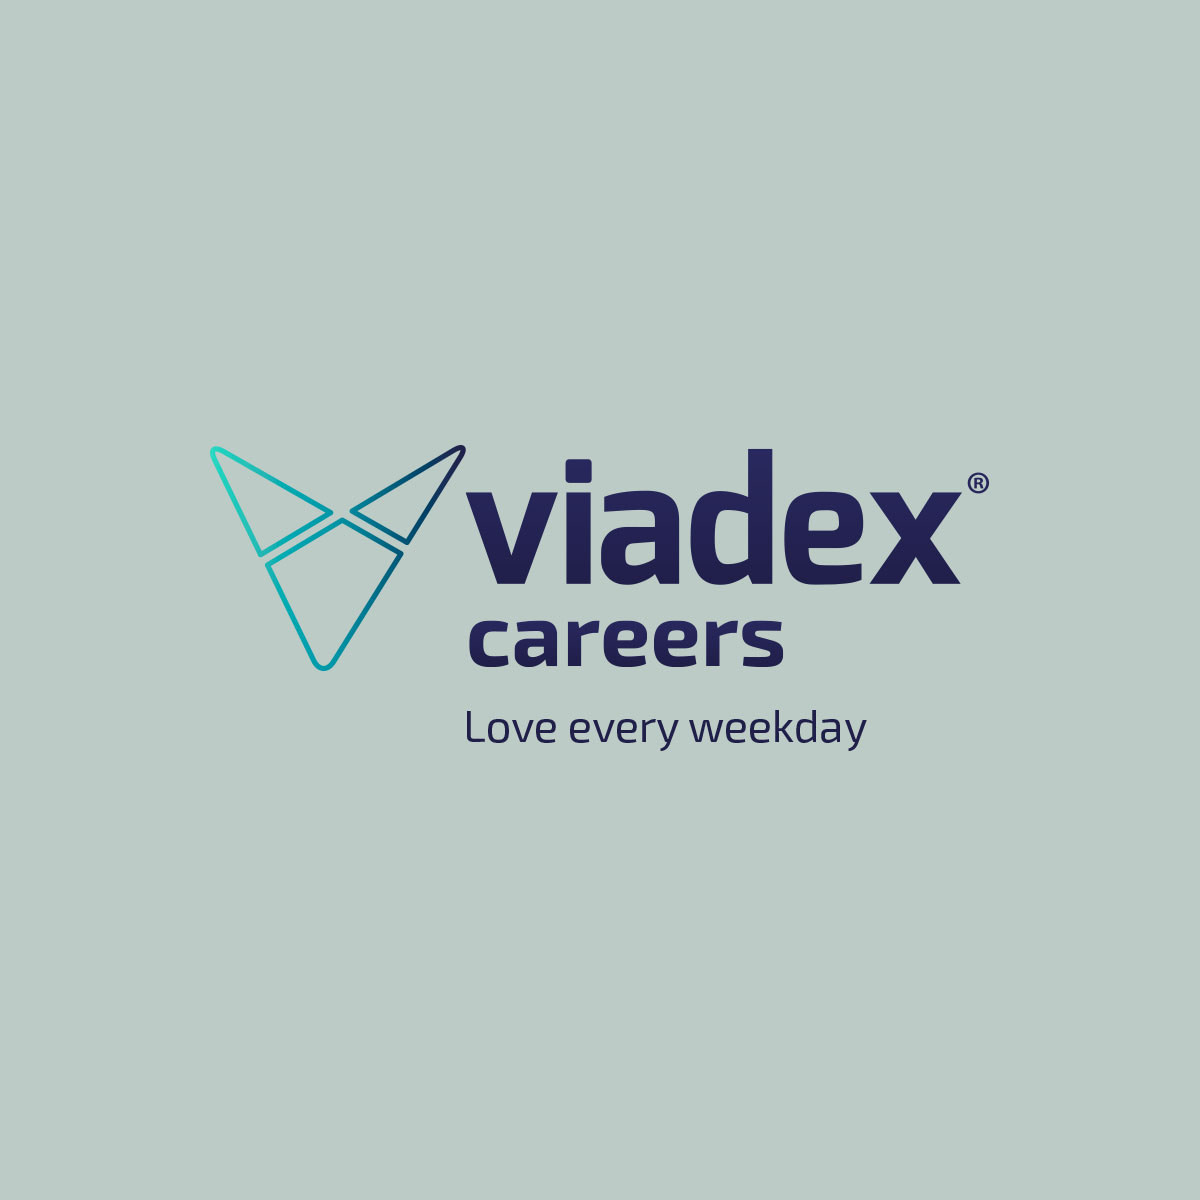 Viadex Careers, building a lasting brand